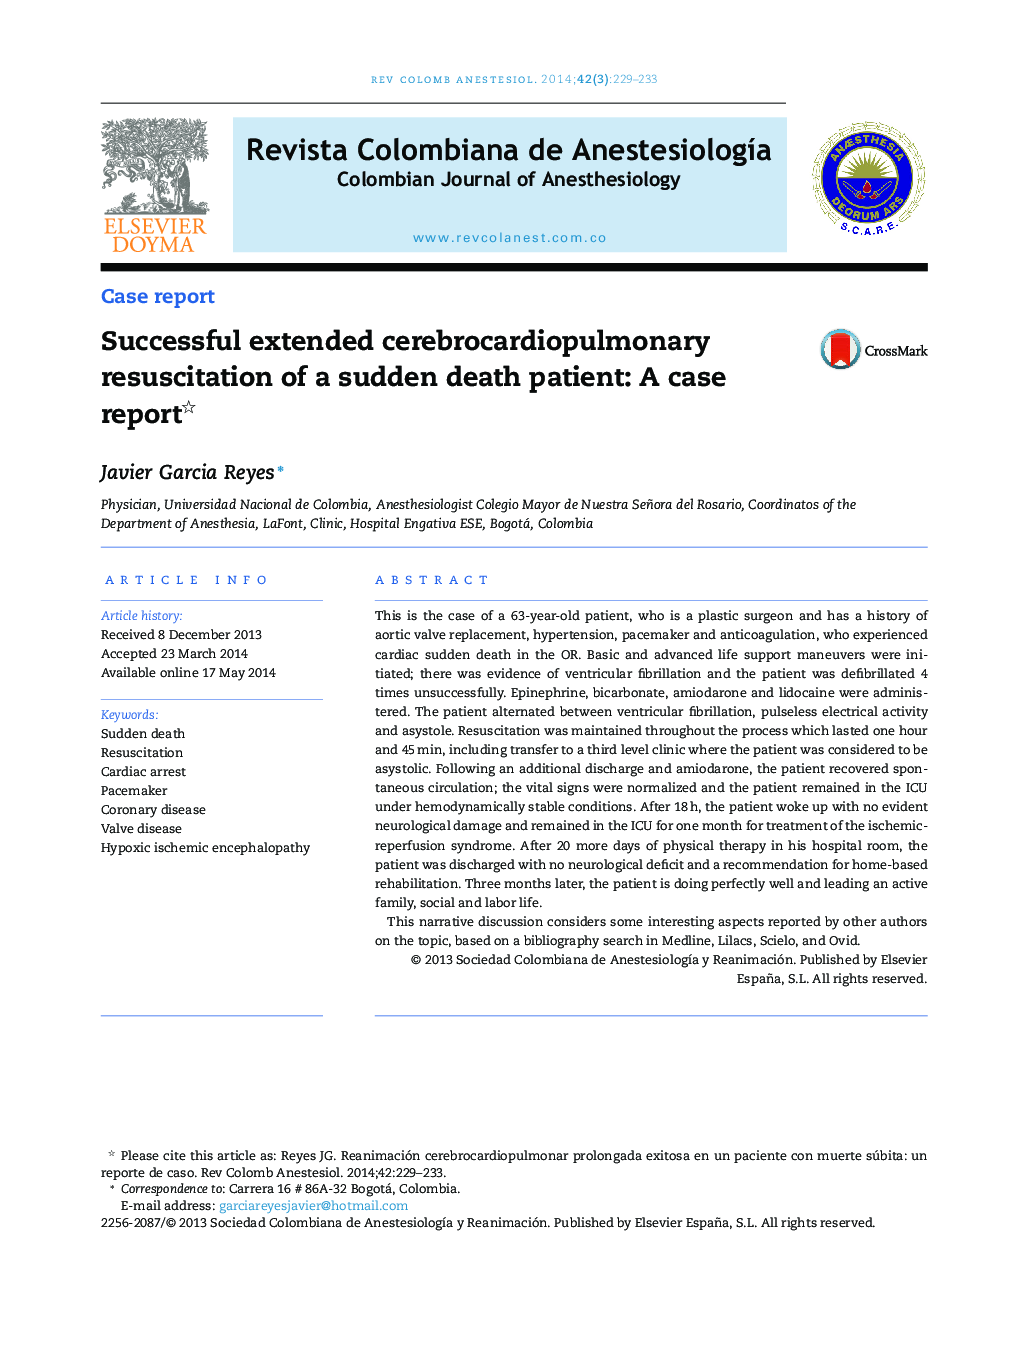 Successful extended cerebrocardiopulmonary resuscitation of a sudden death patient: A case report